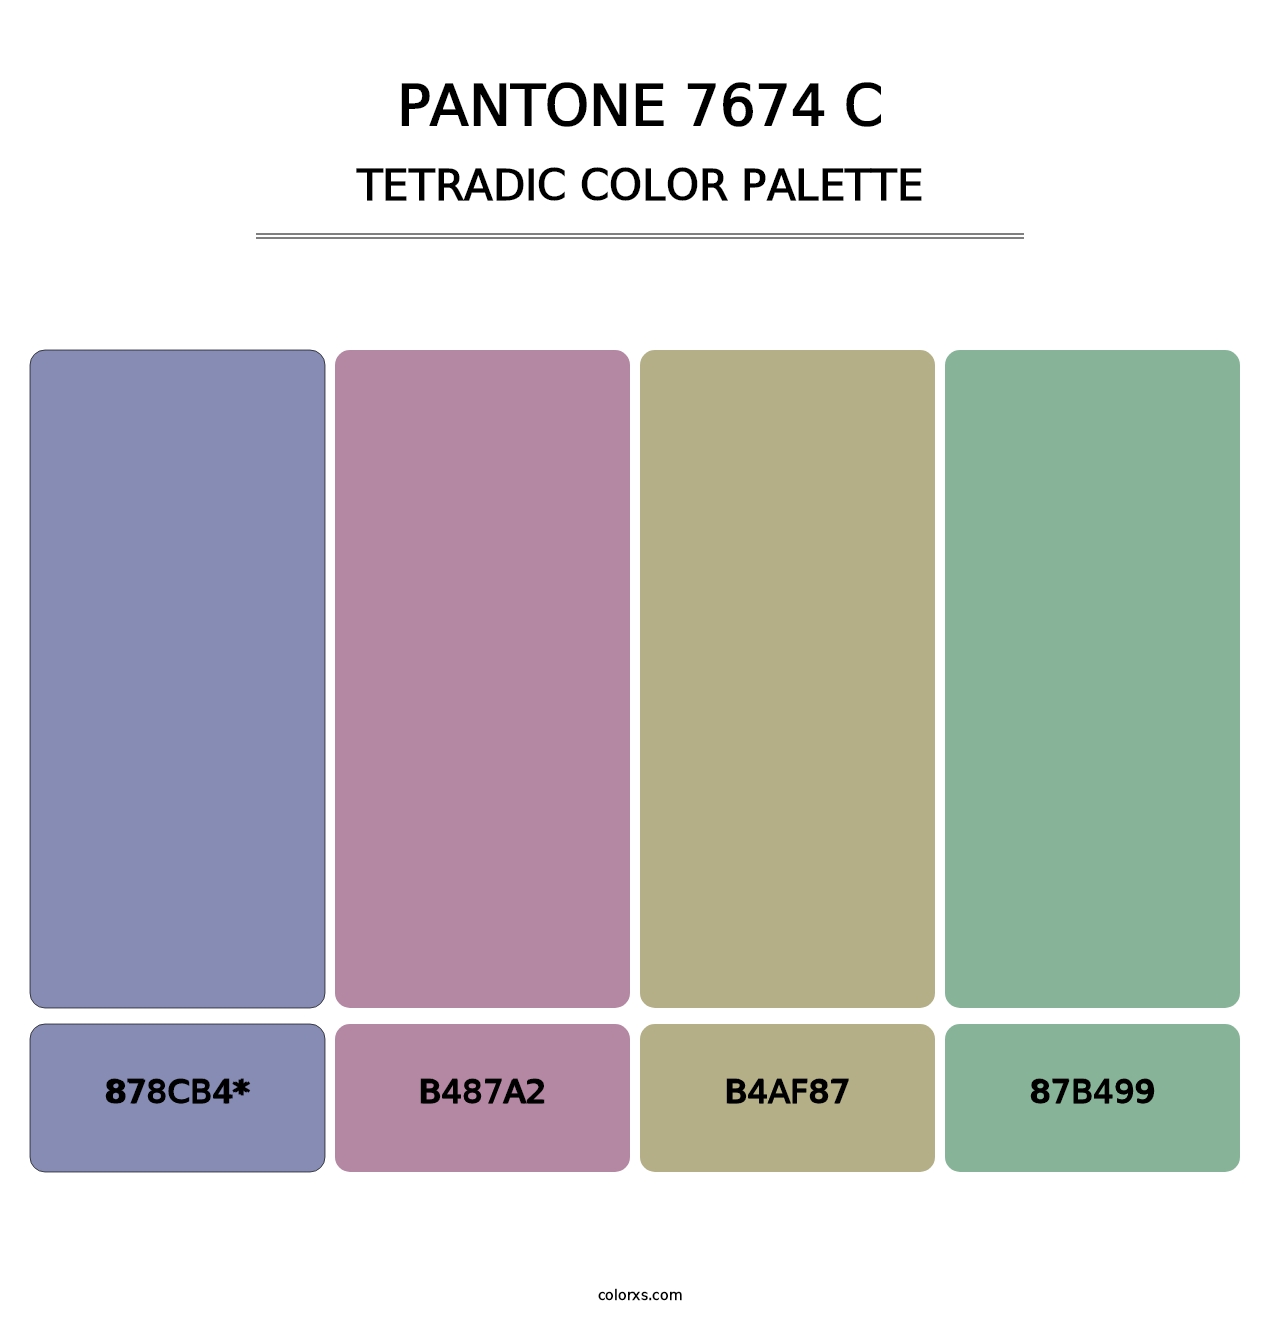 PANTONE 7674 C - Tetradic Color Palette